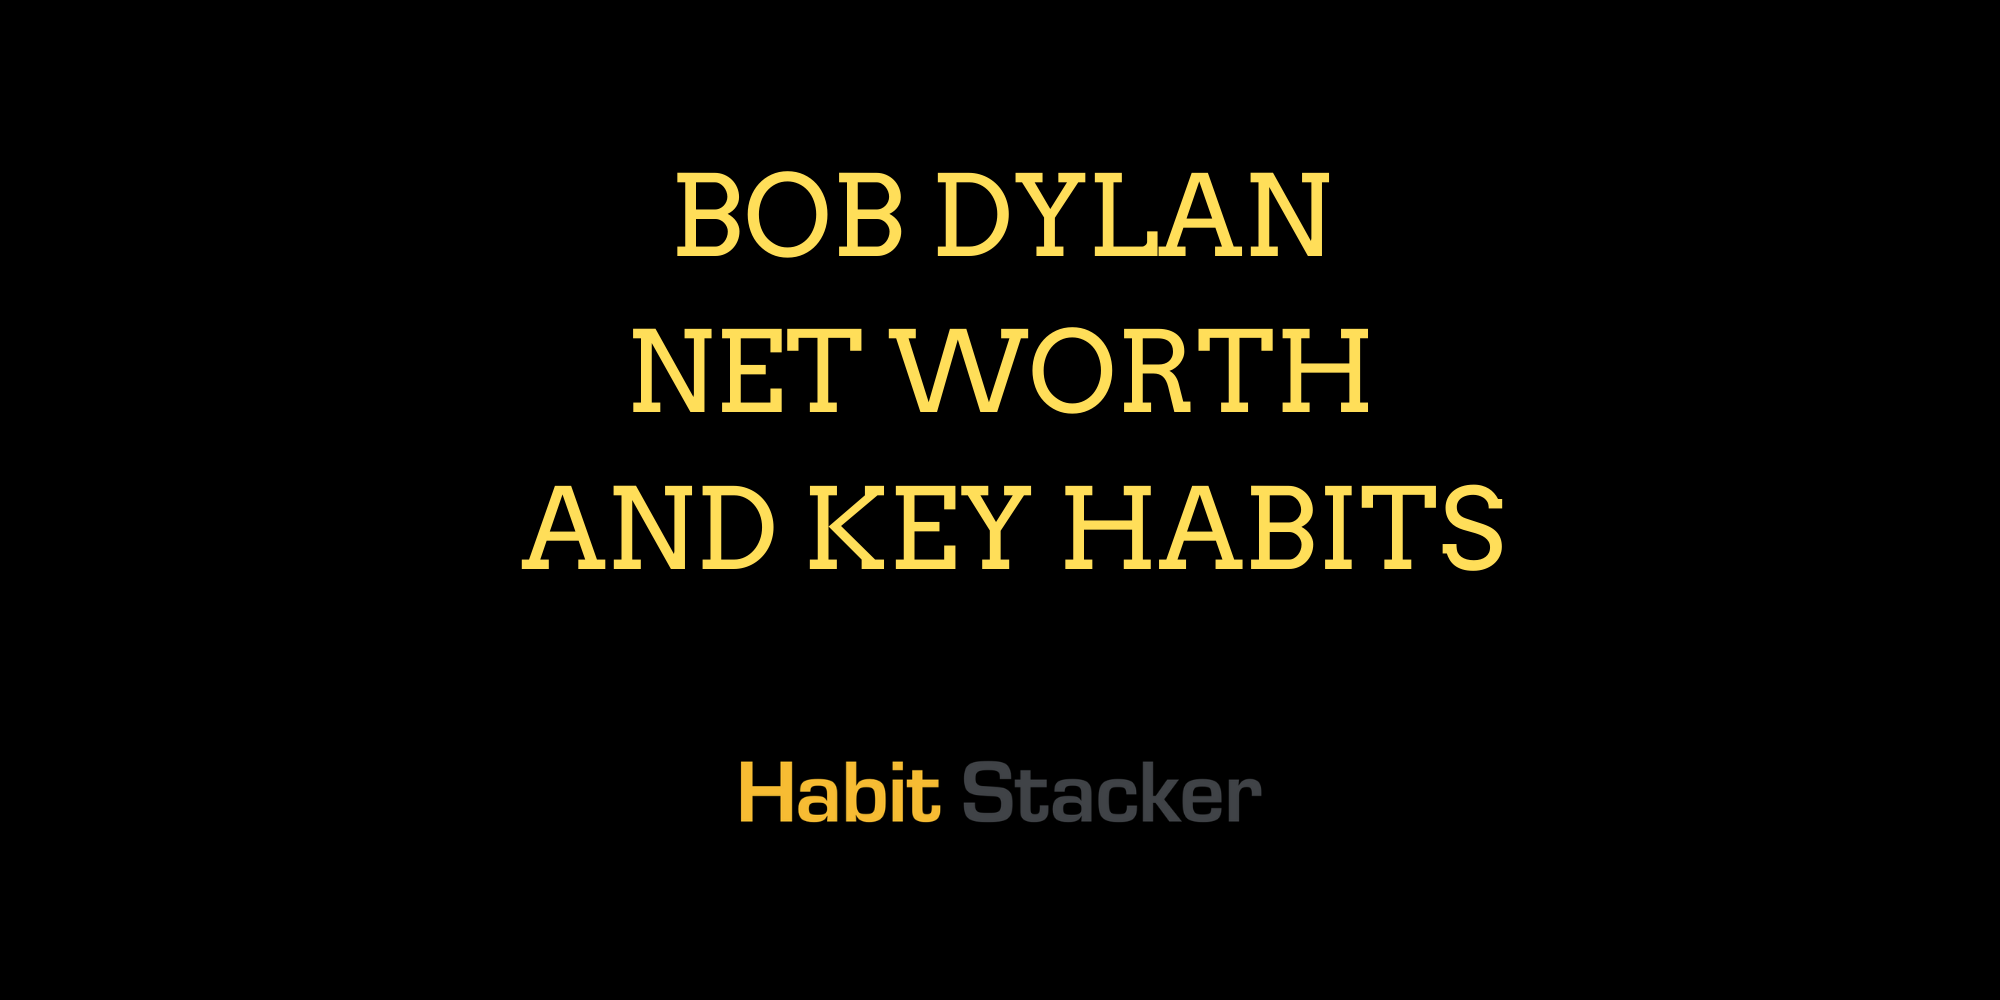 Bob Dylan Net Worth and Key Habits